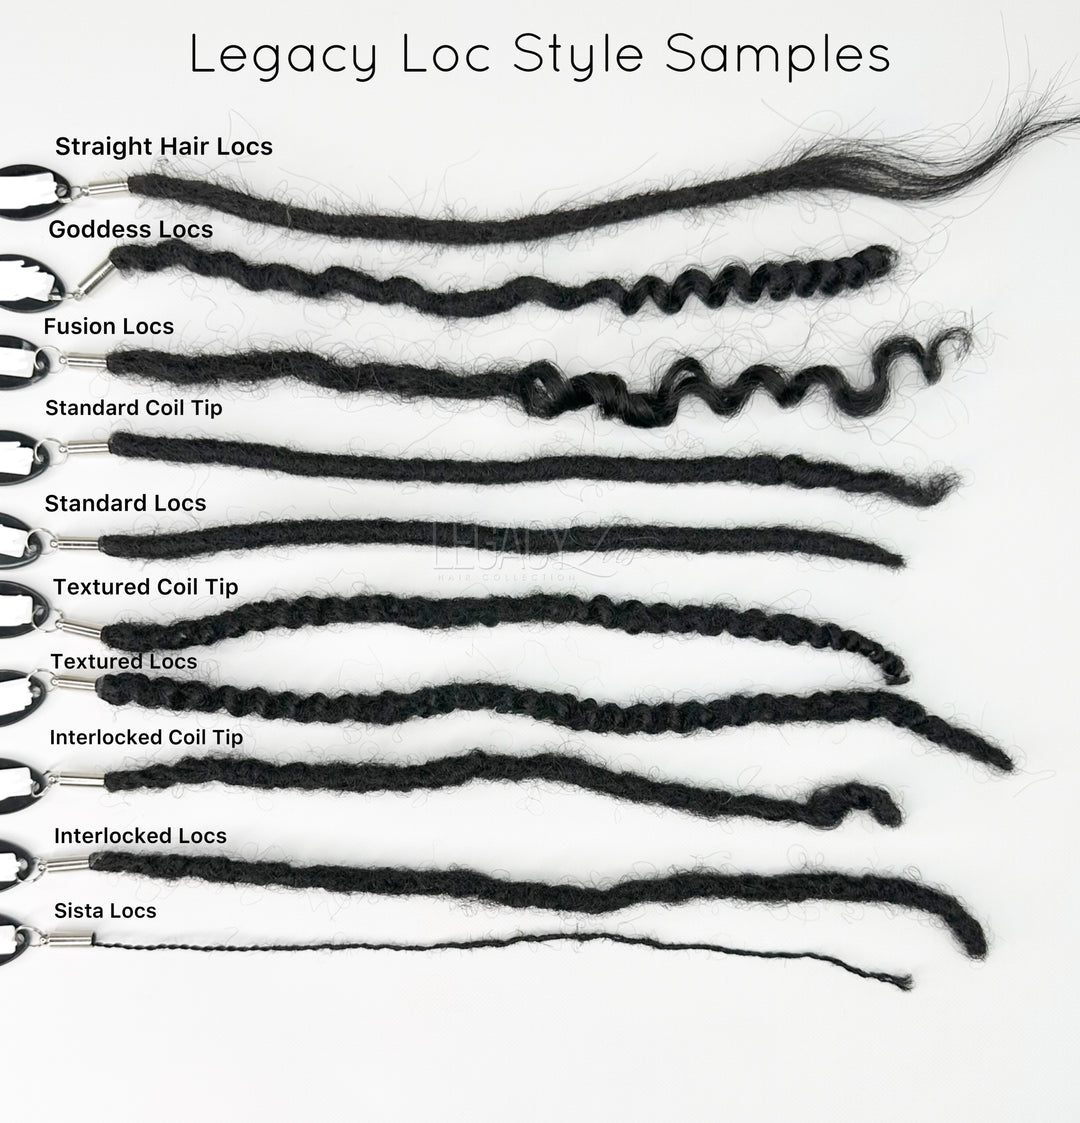 Legacy Loc STYLES Sample Ring